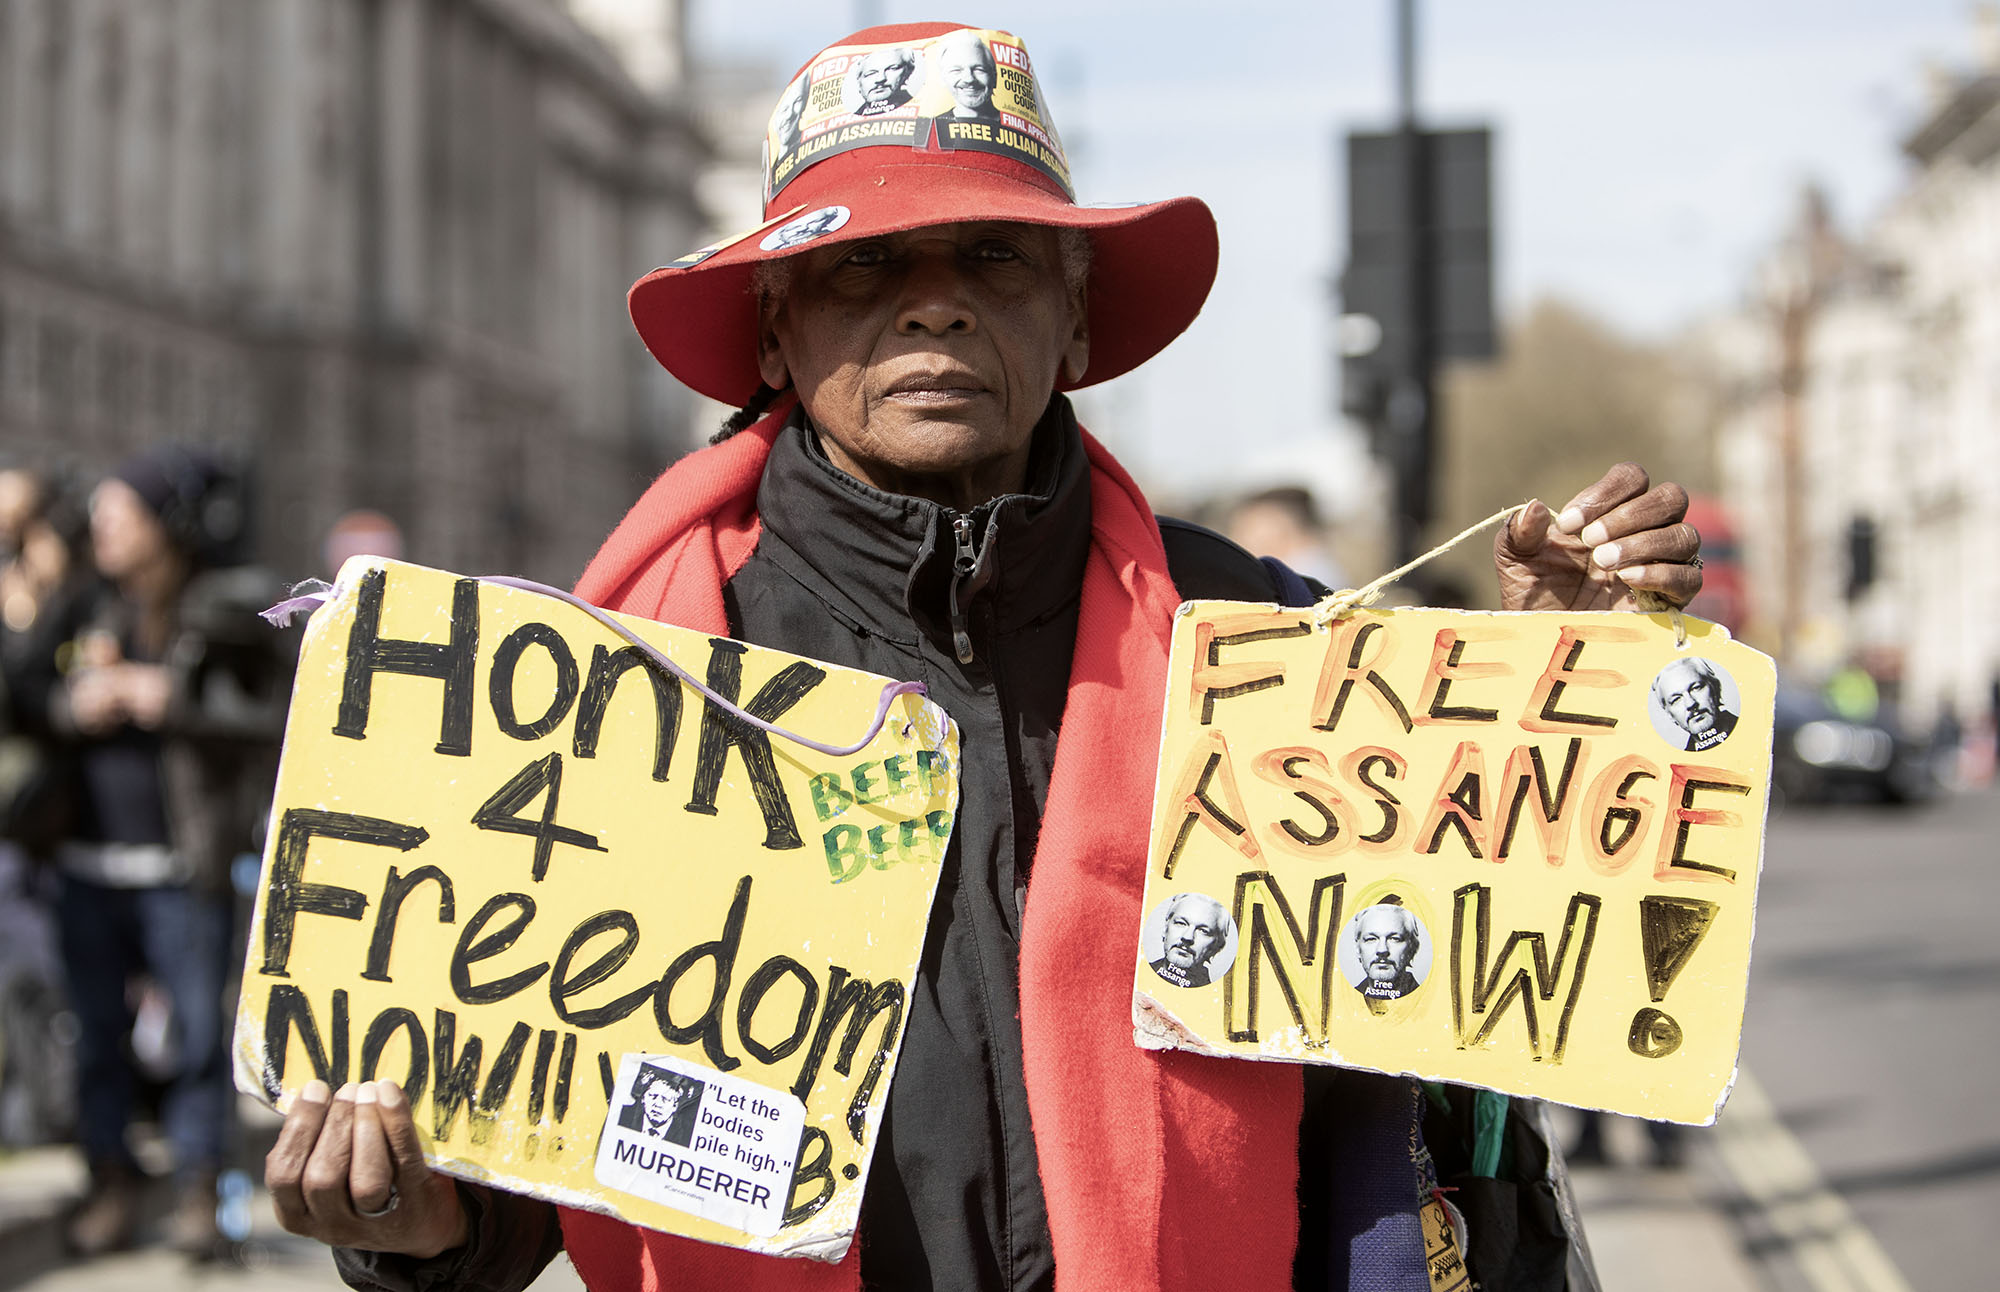 assange protest wildman